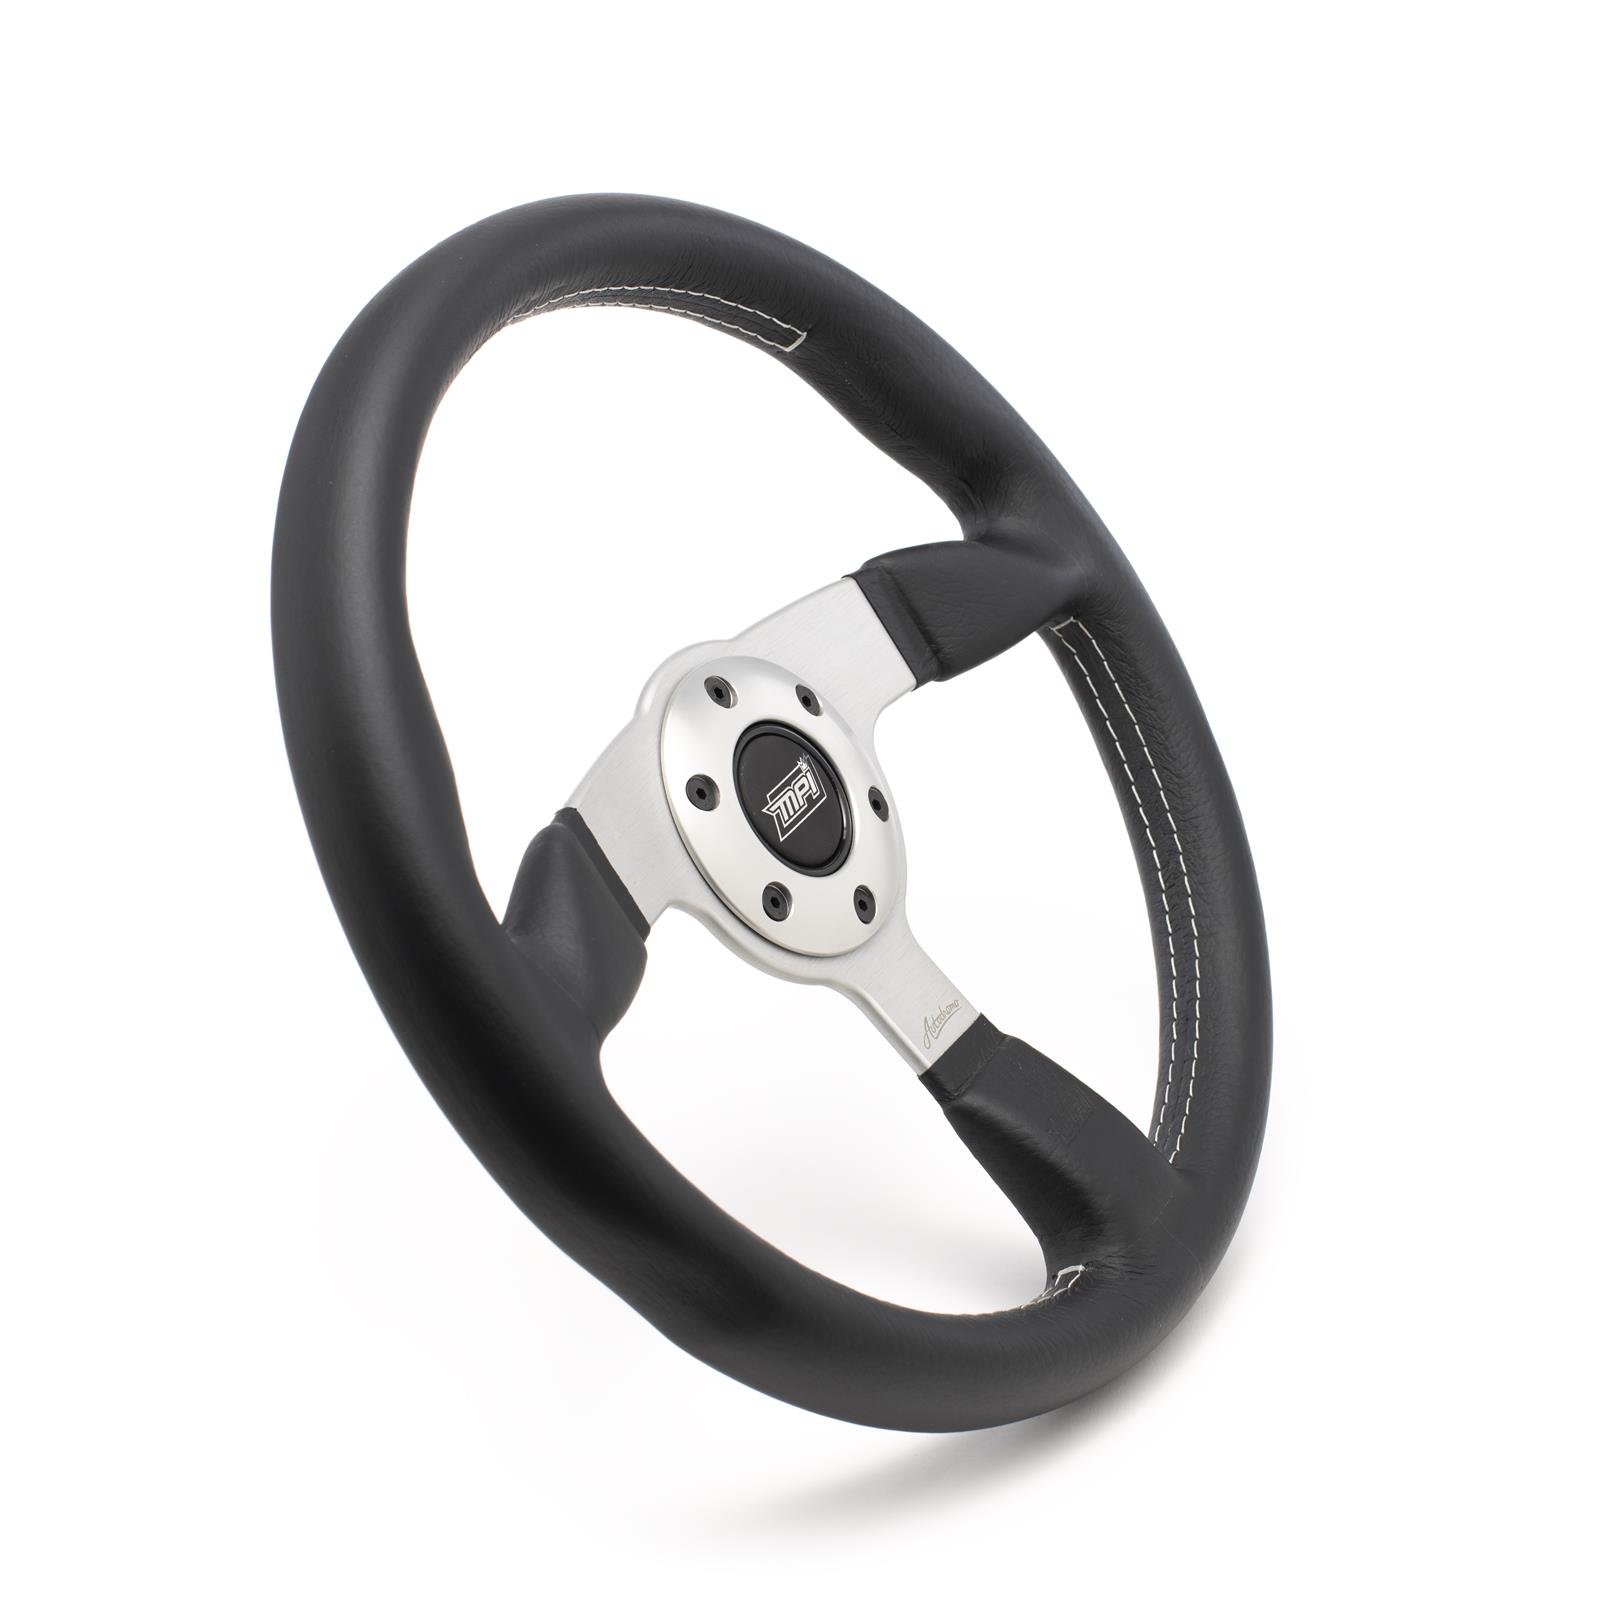 Steering Wheels – Max Papis Innovations